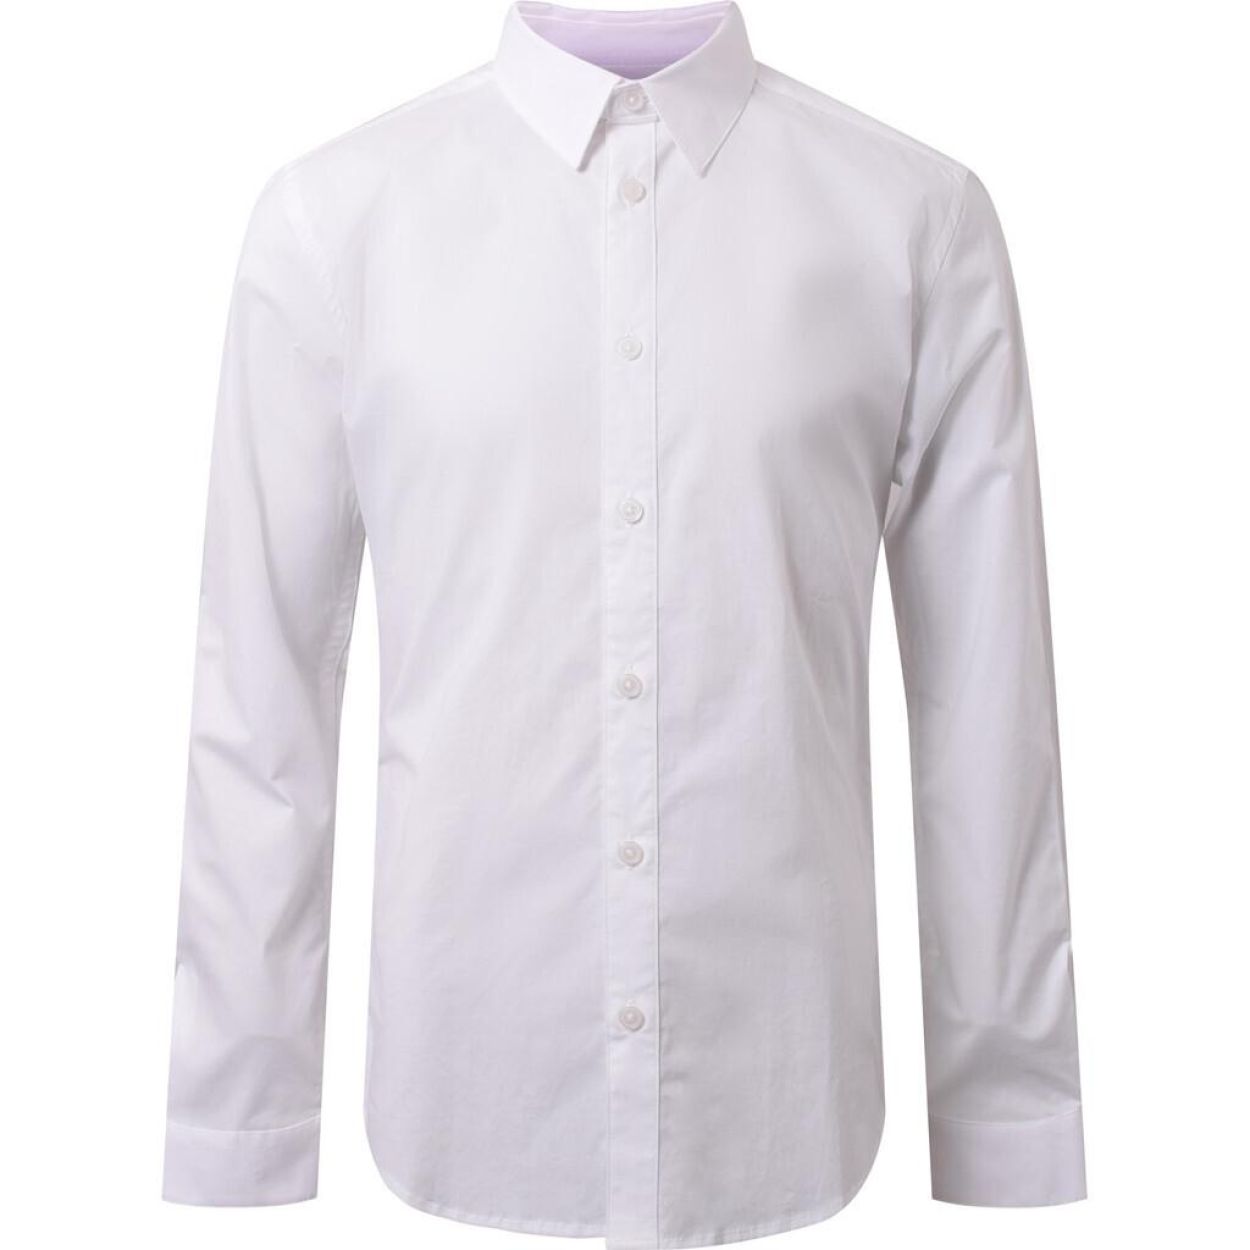 HOUNd Performance shirt L/S (2241207/100 White) - WeekendMode